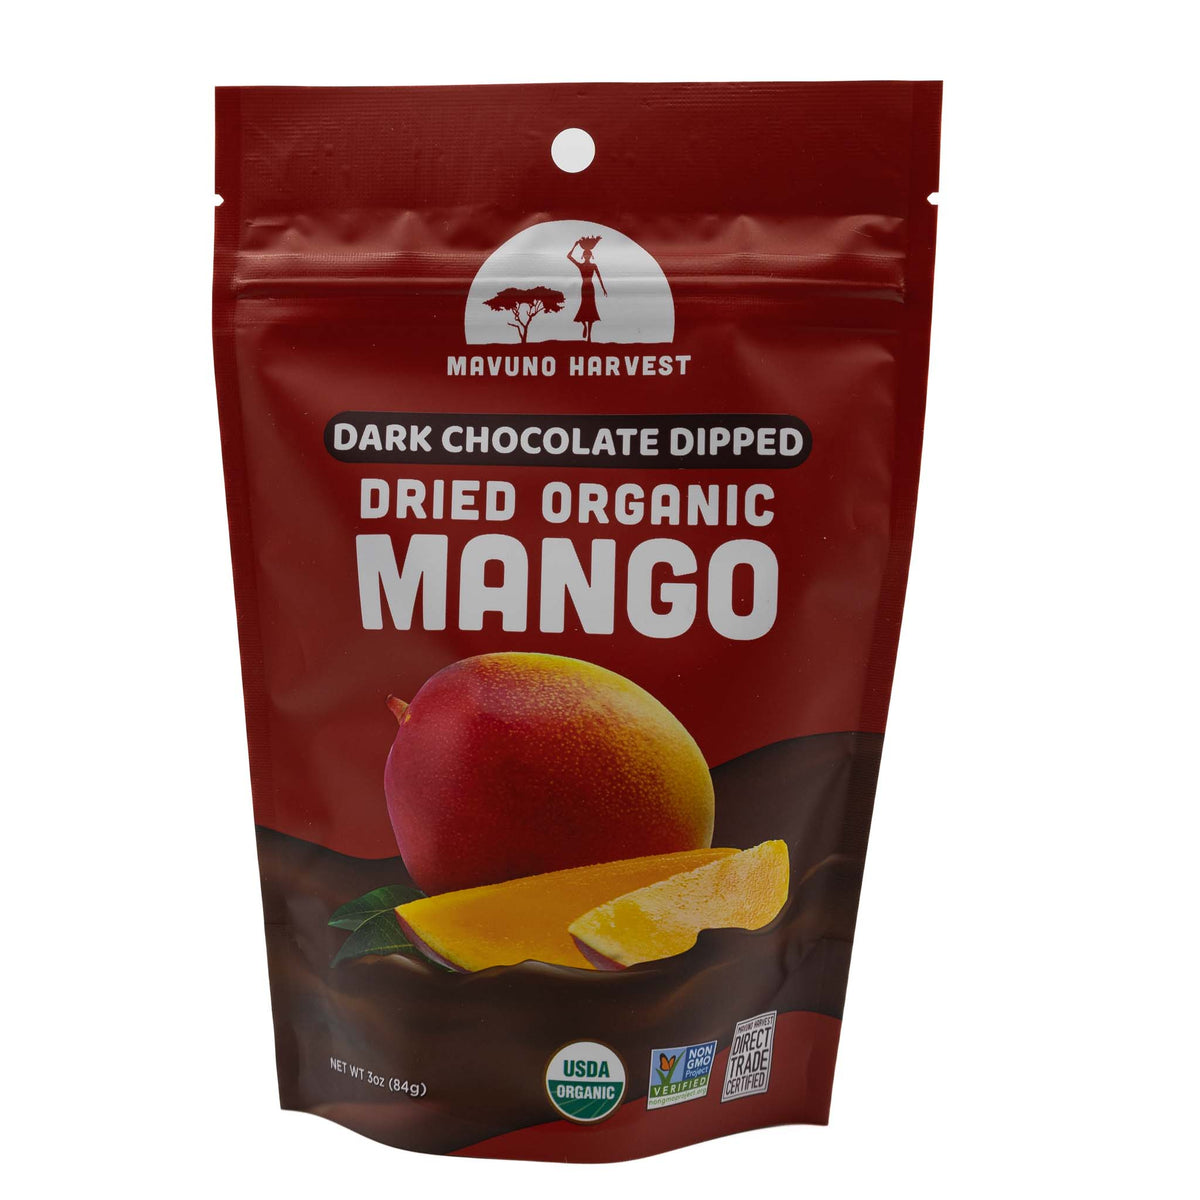 Mavuno Harvest Dried Mango Chocolate